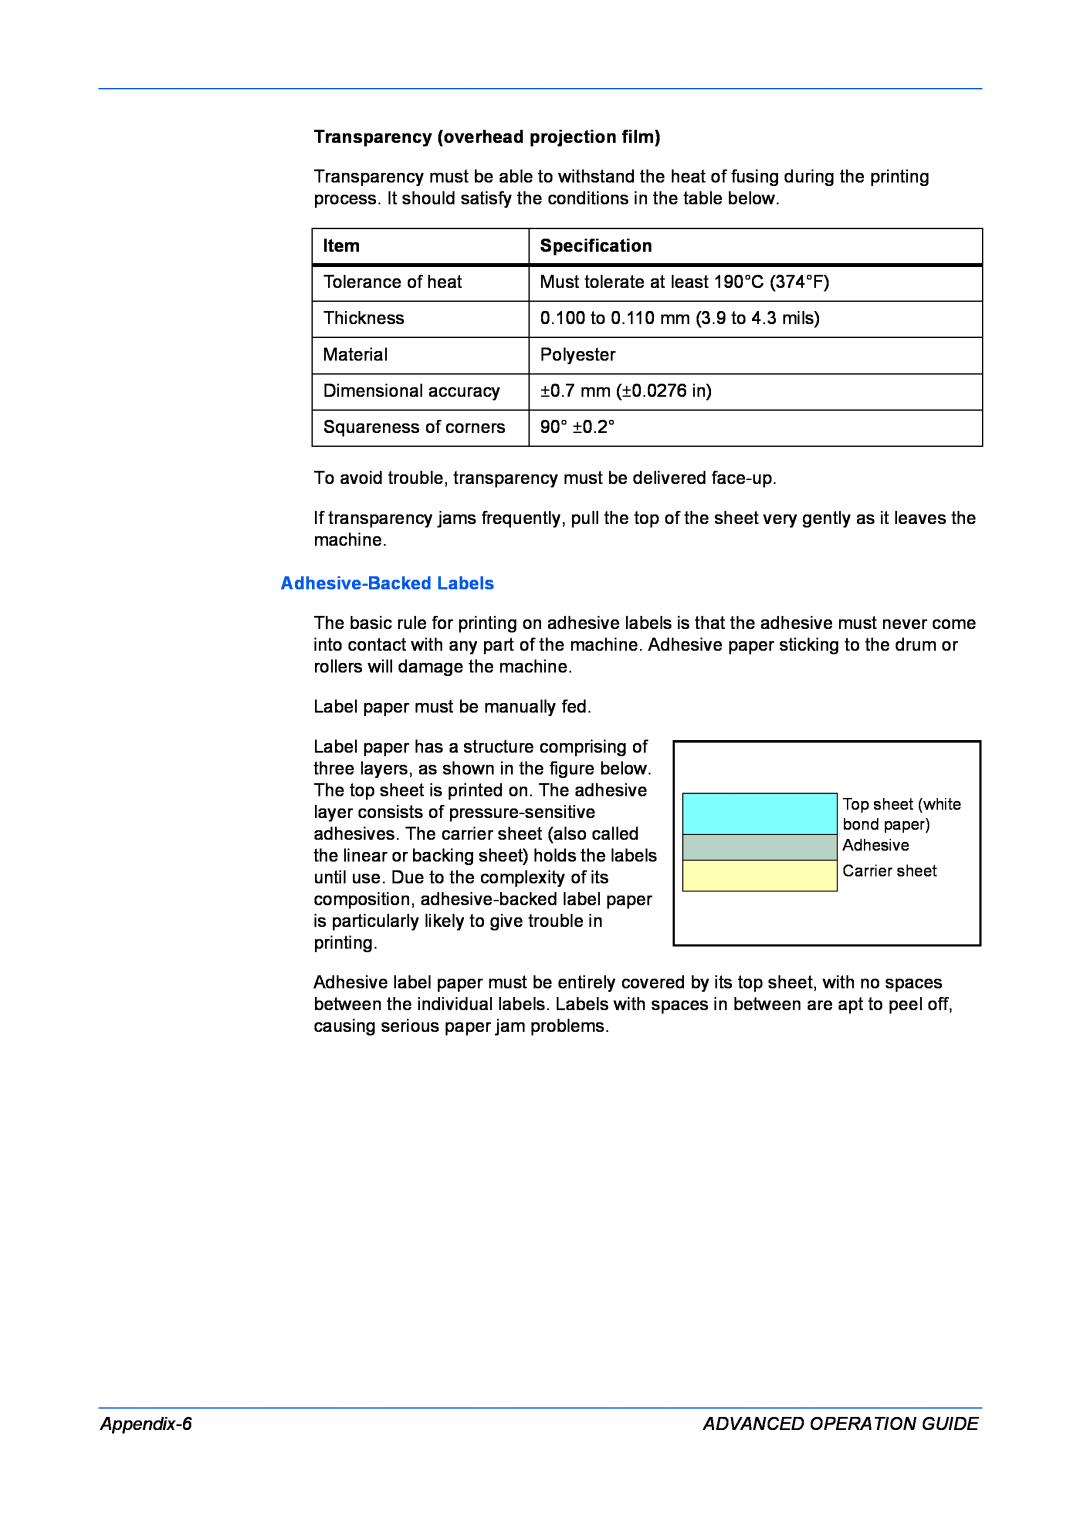 Kyocera KM-1820 manual Adhesive-Backed Labels, Top sheet white bond paper Adhesive Carrier sheet 